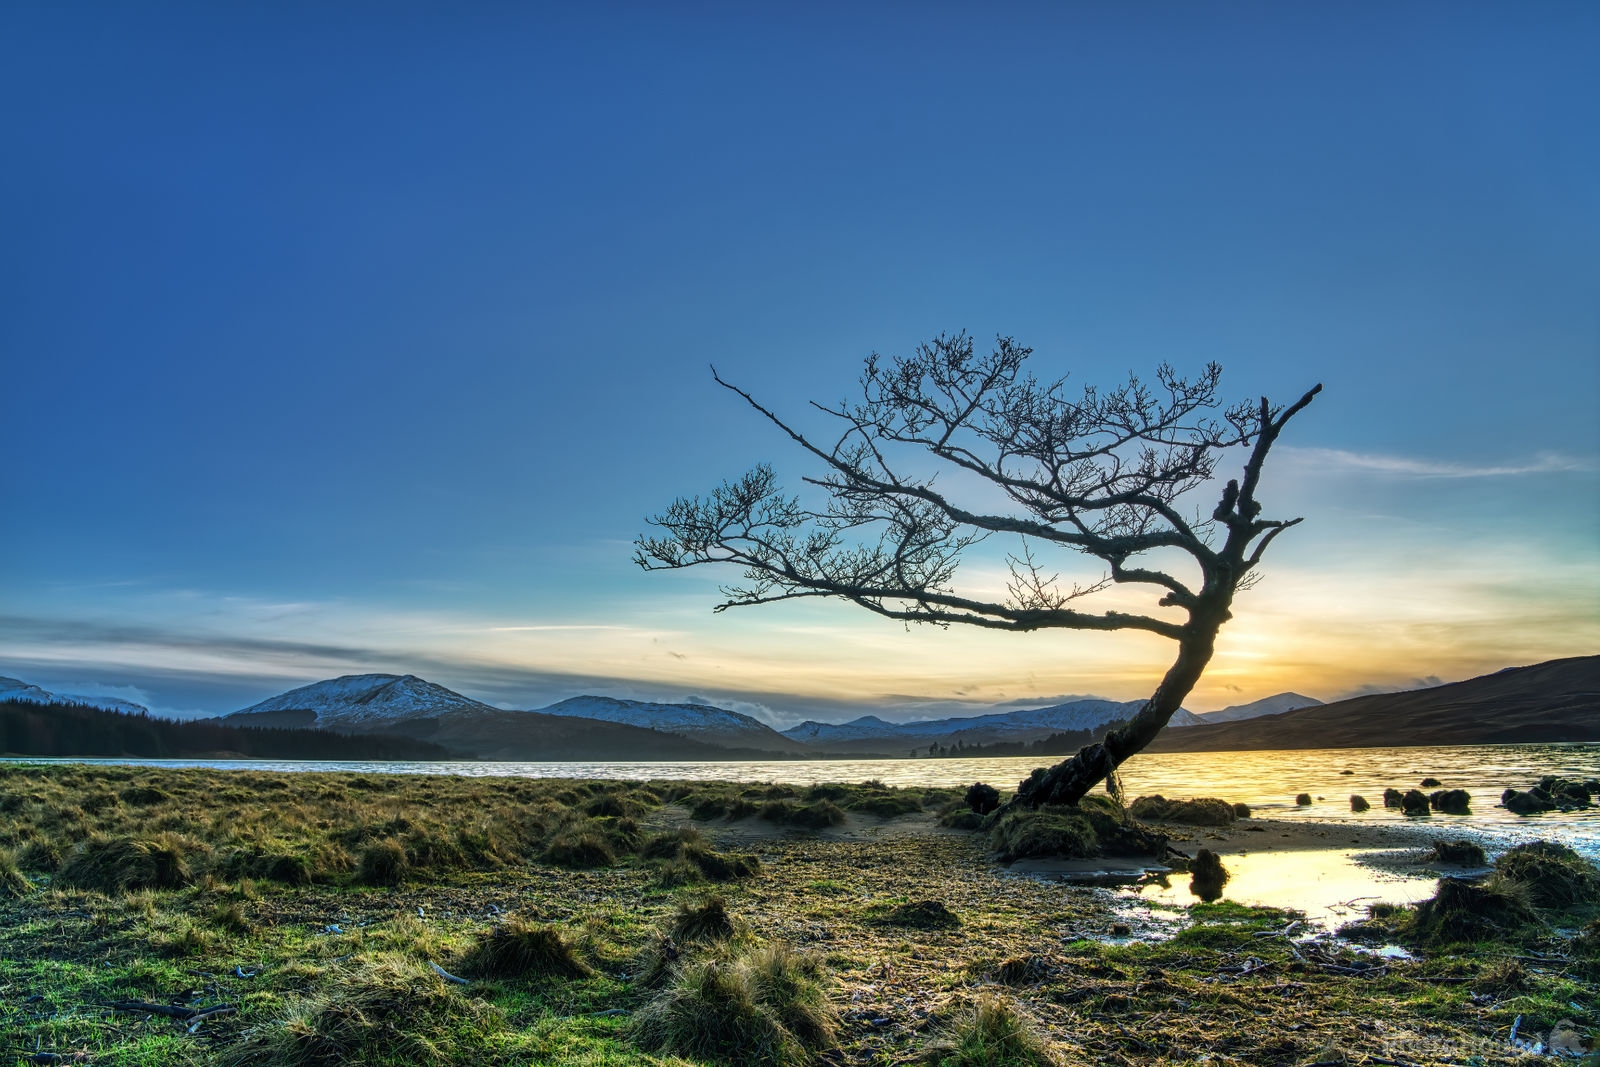 Image of Loch Tulla (Beach) by Peter Zalabai